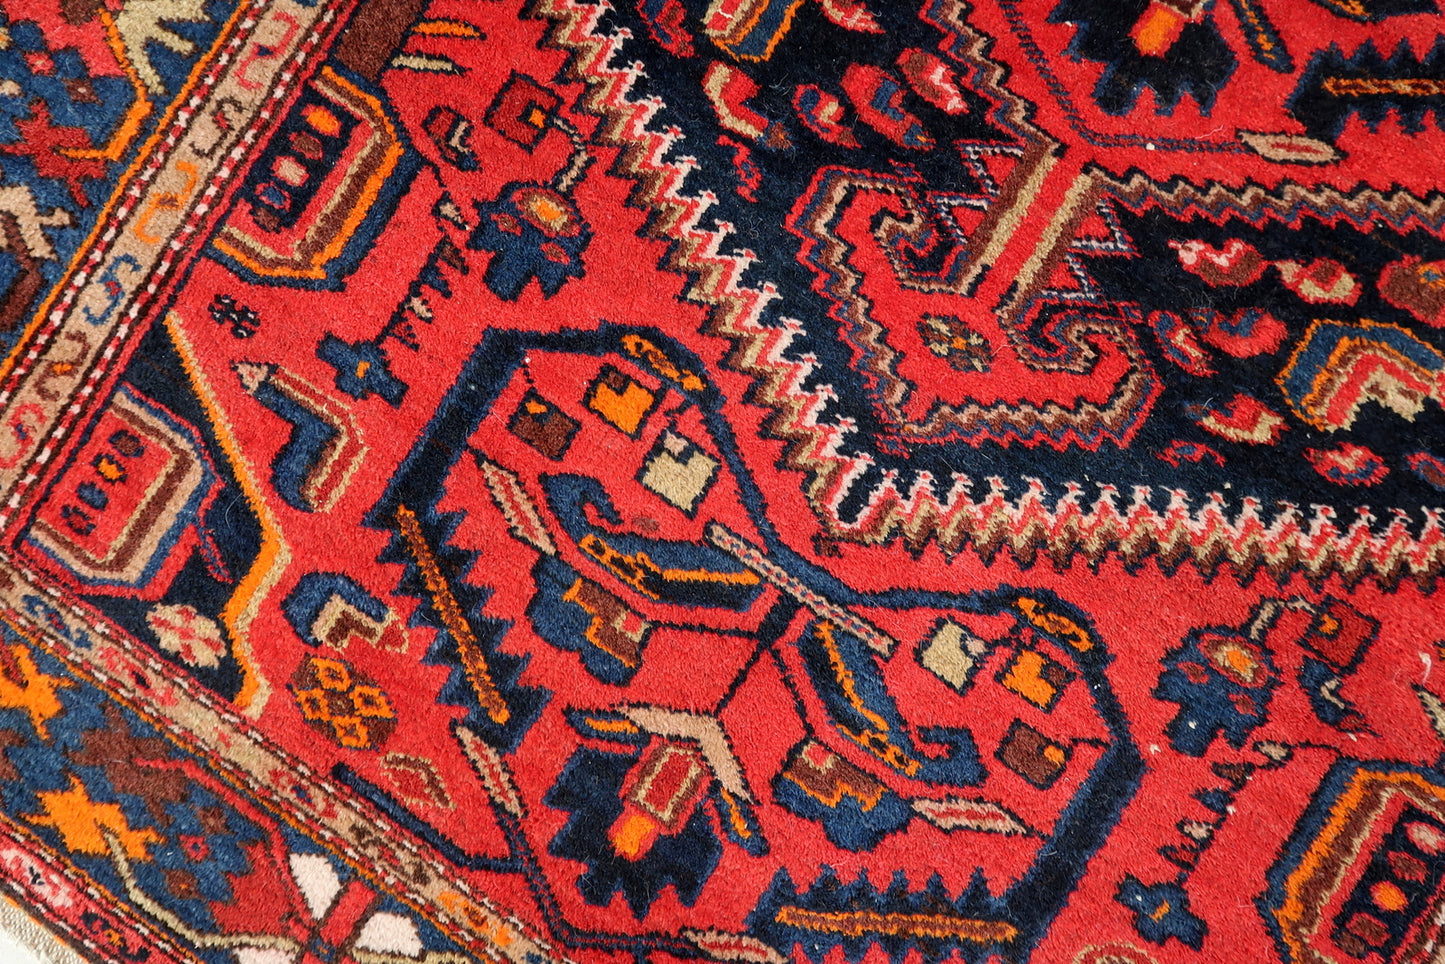 Fine Woolen Textiles in the Handmade Vintage Rug - Cultural Heritage